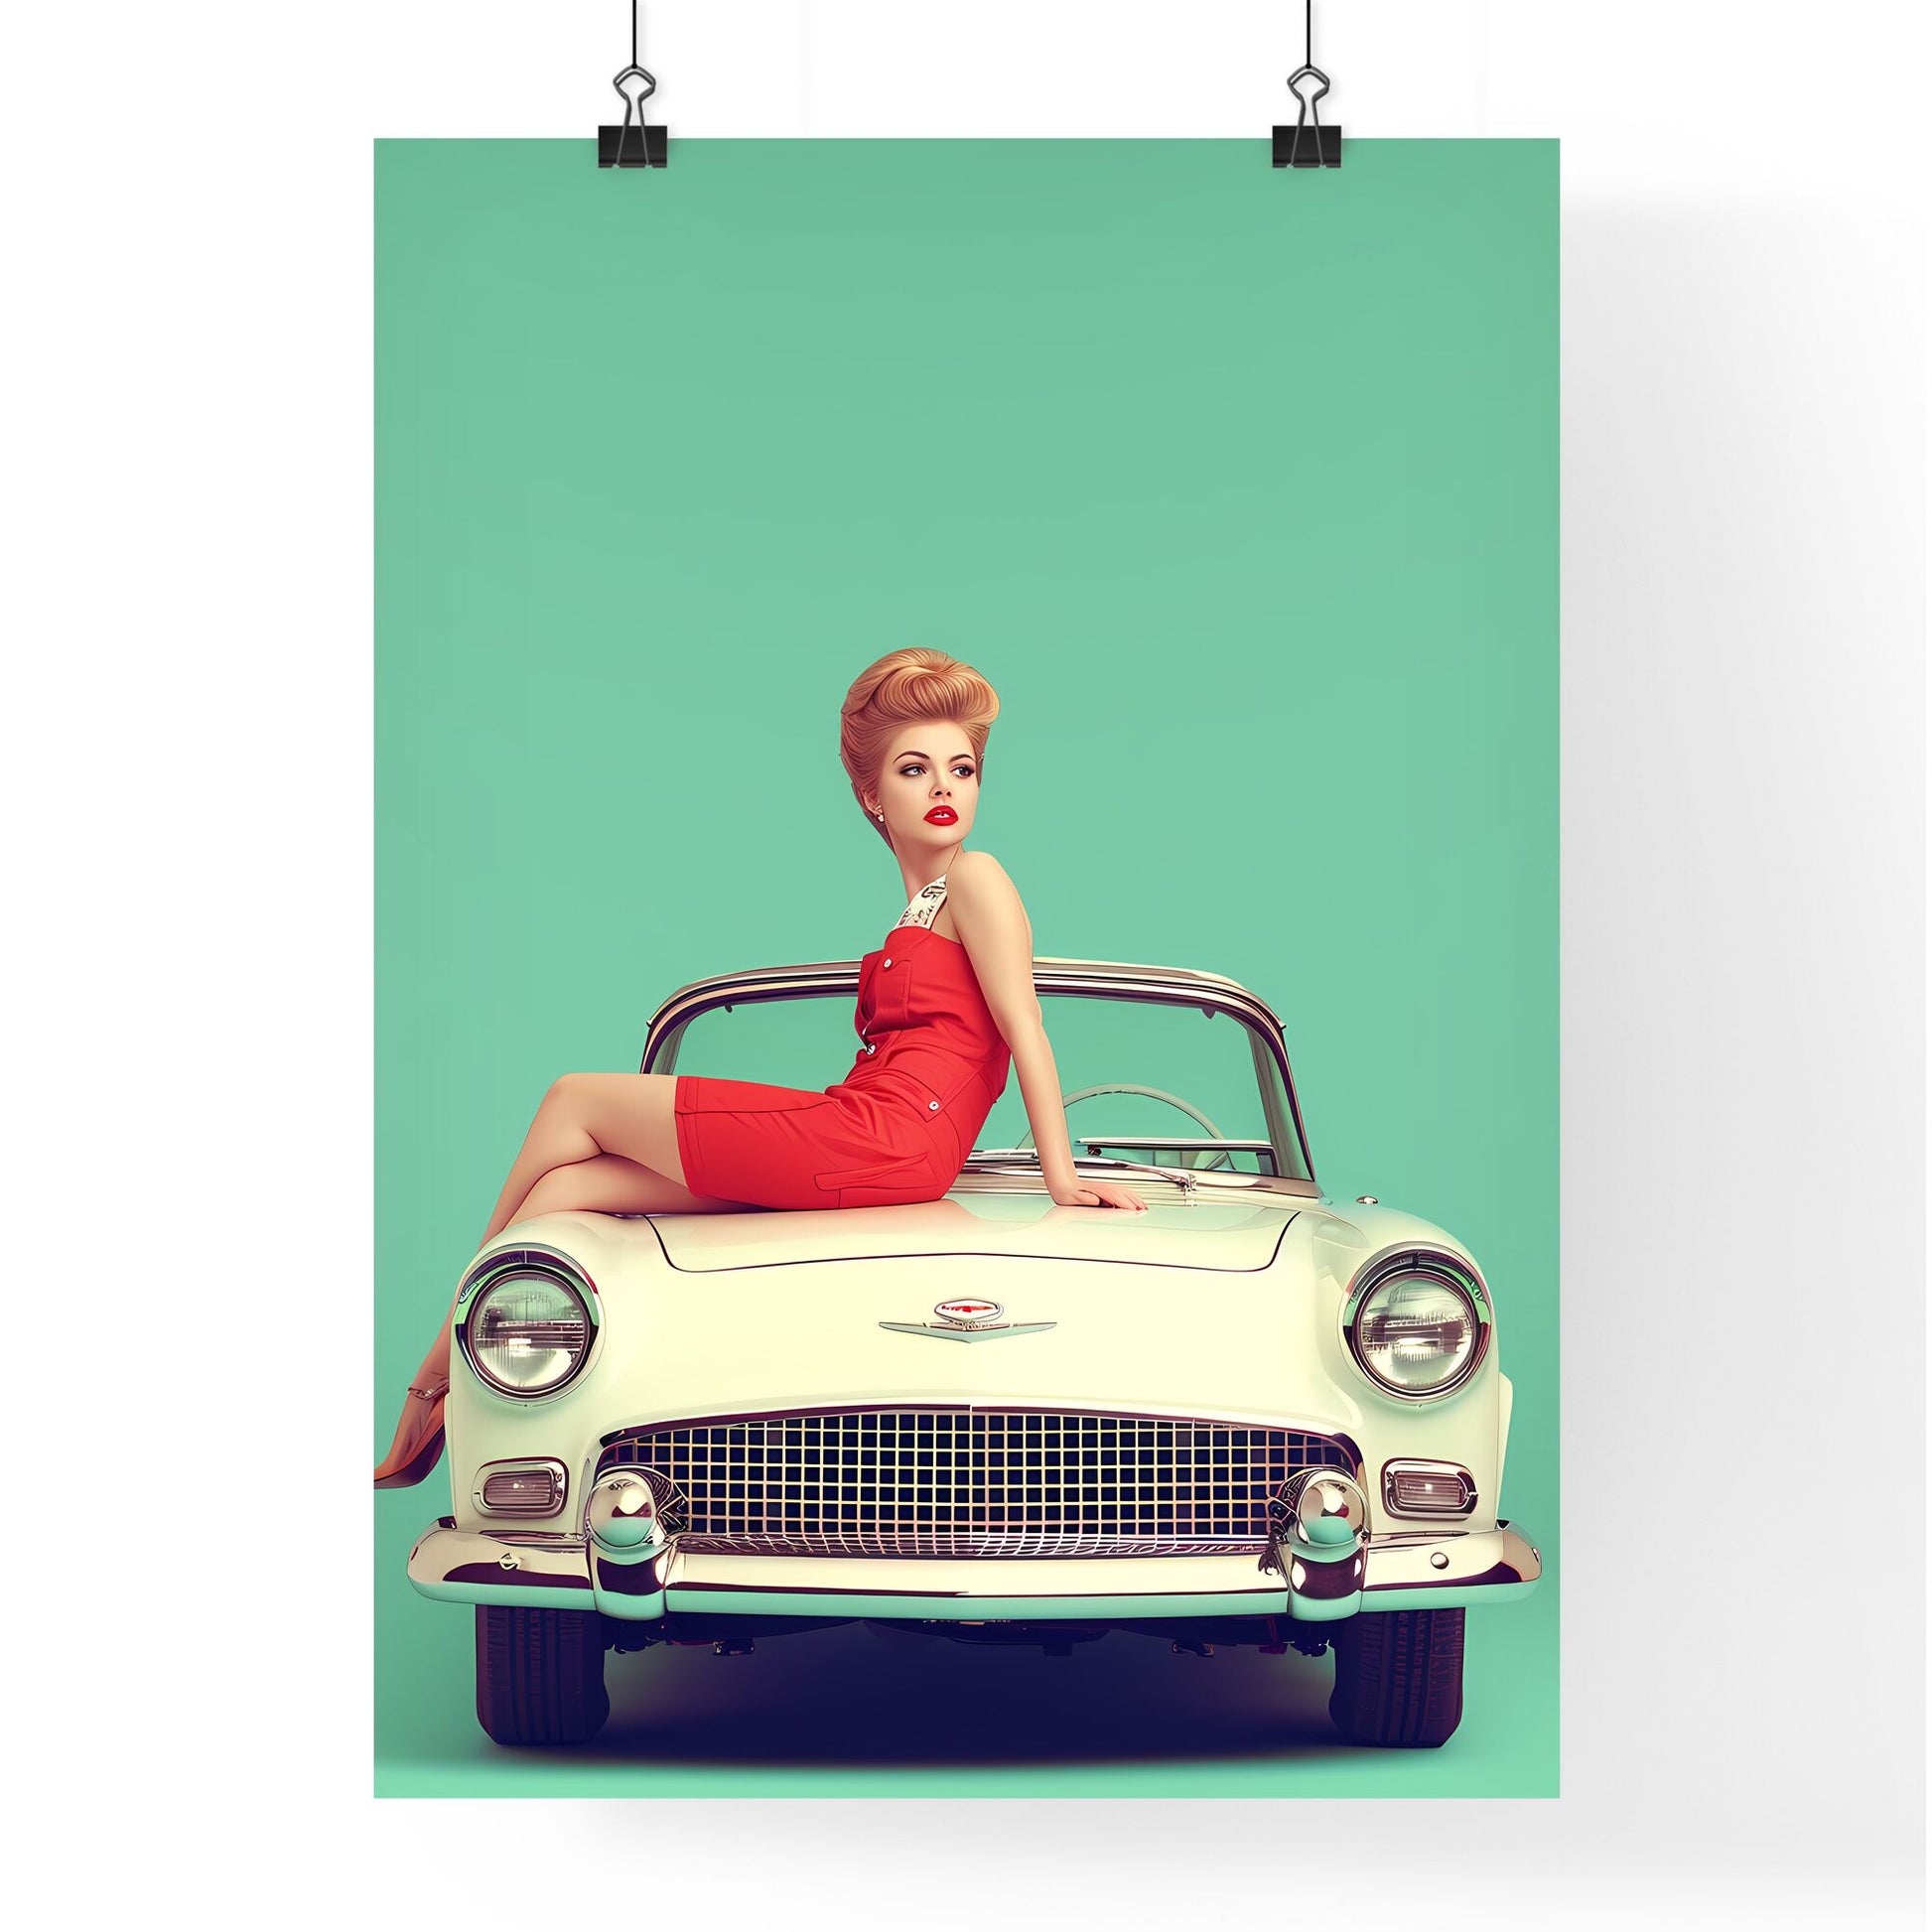 Auto mechanic - Art print of a woman sitting on a car Default Title